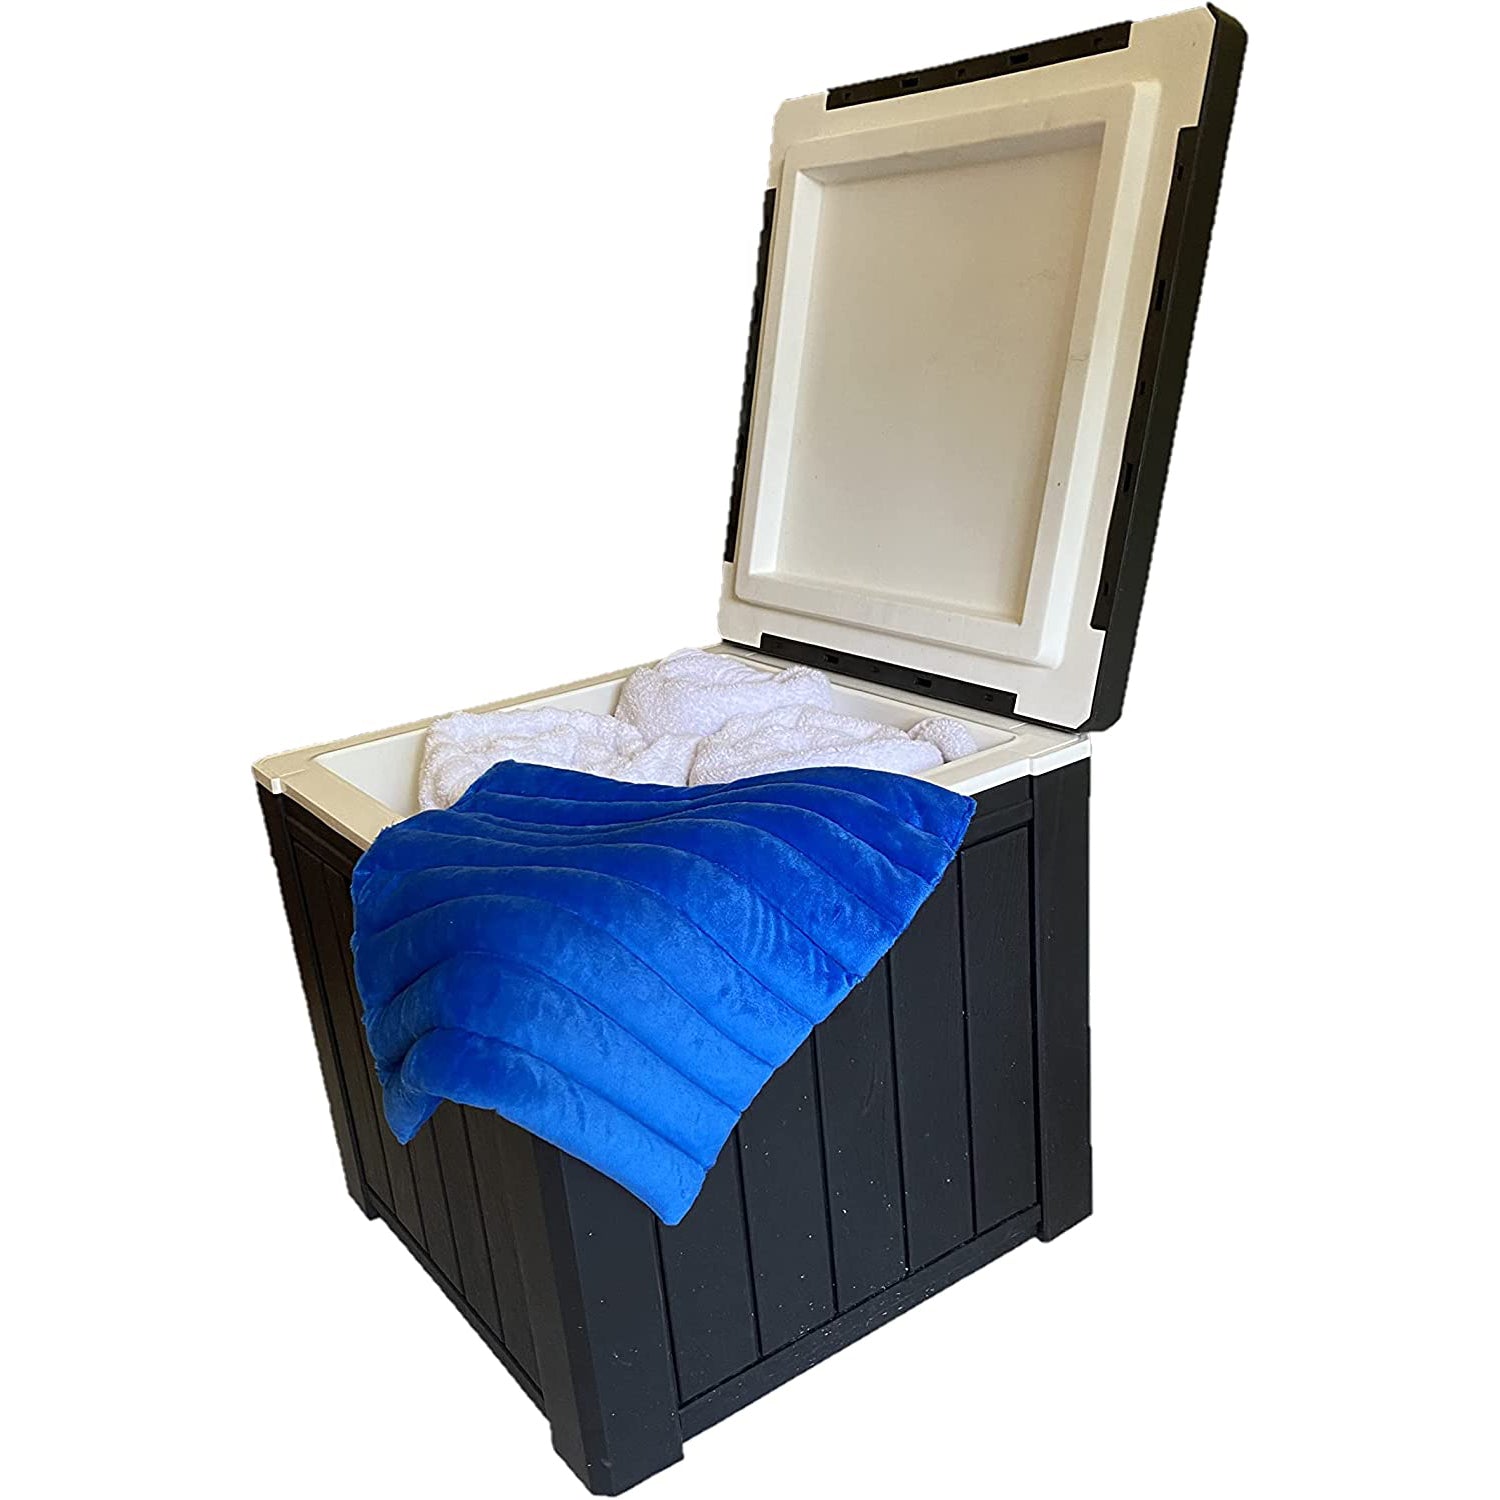 Spatender - Hot Tub Towel and Robe Warmer & Cooler Deck Box